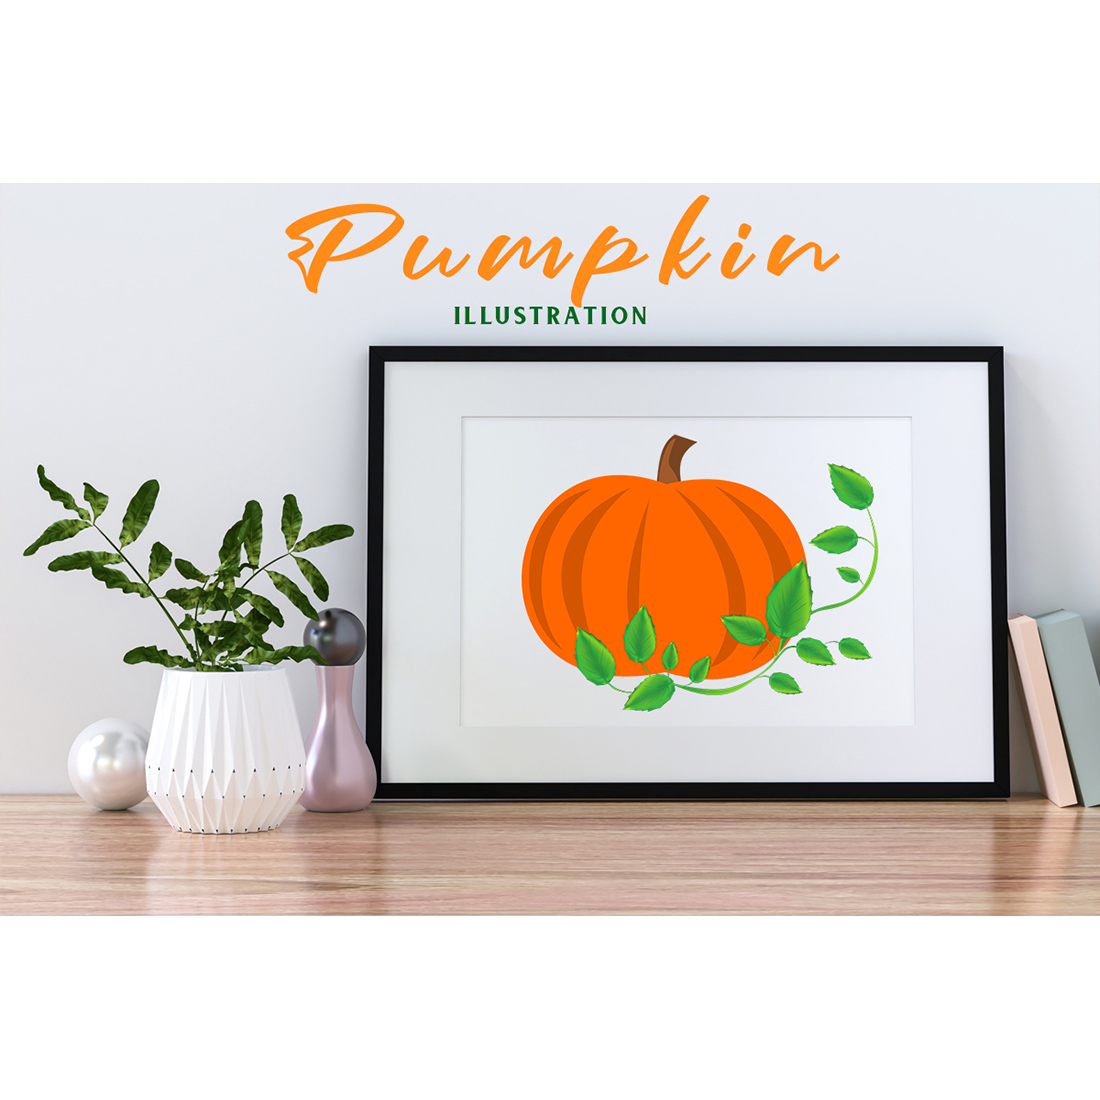 Wonderful image of a pumpkin in a frame